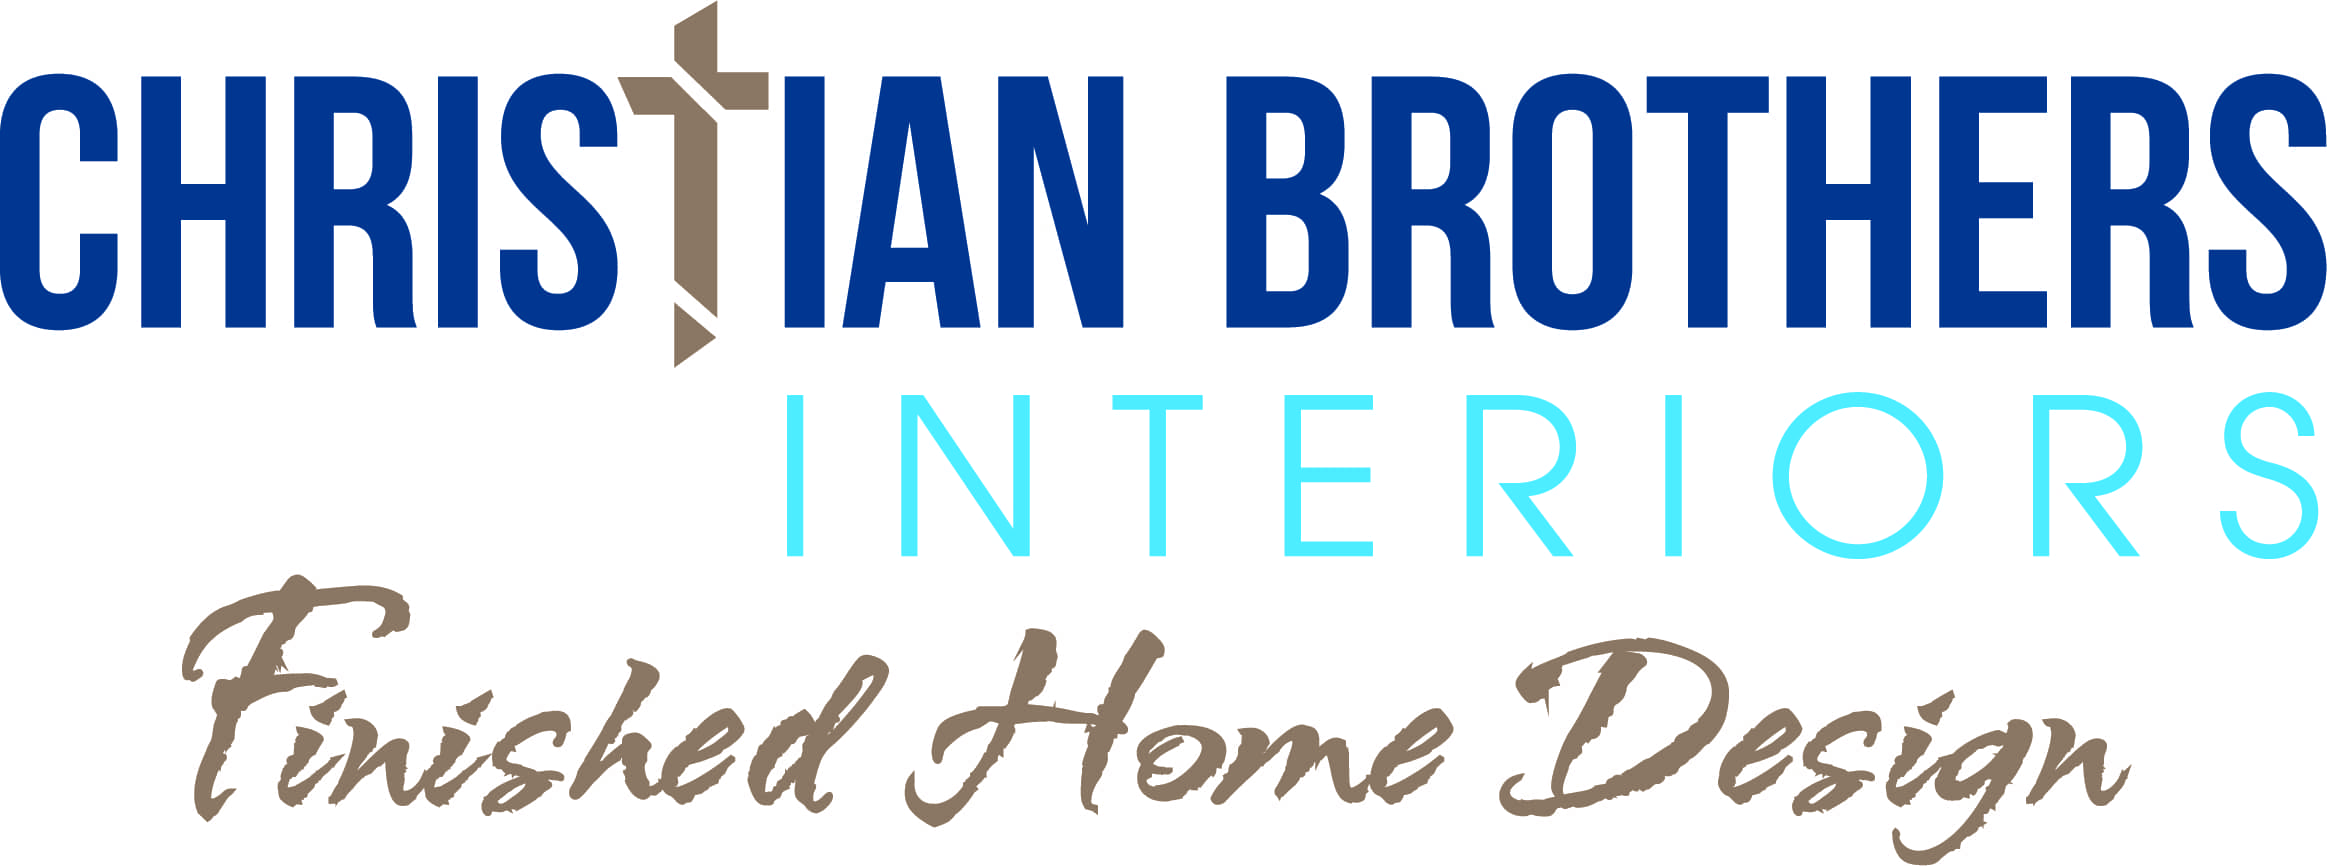 Logo | Christian Brothers Flooring & Interiors